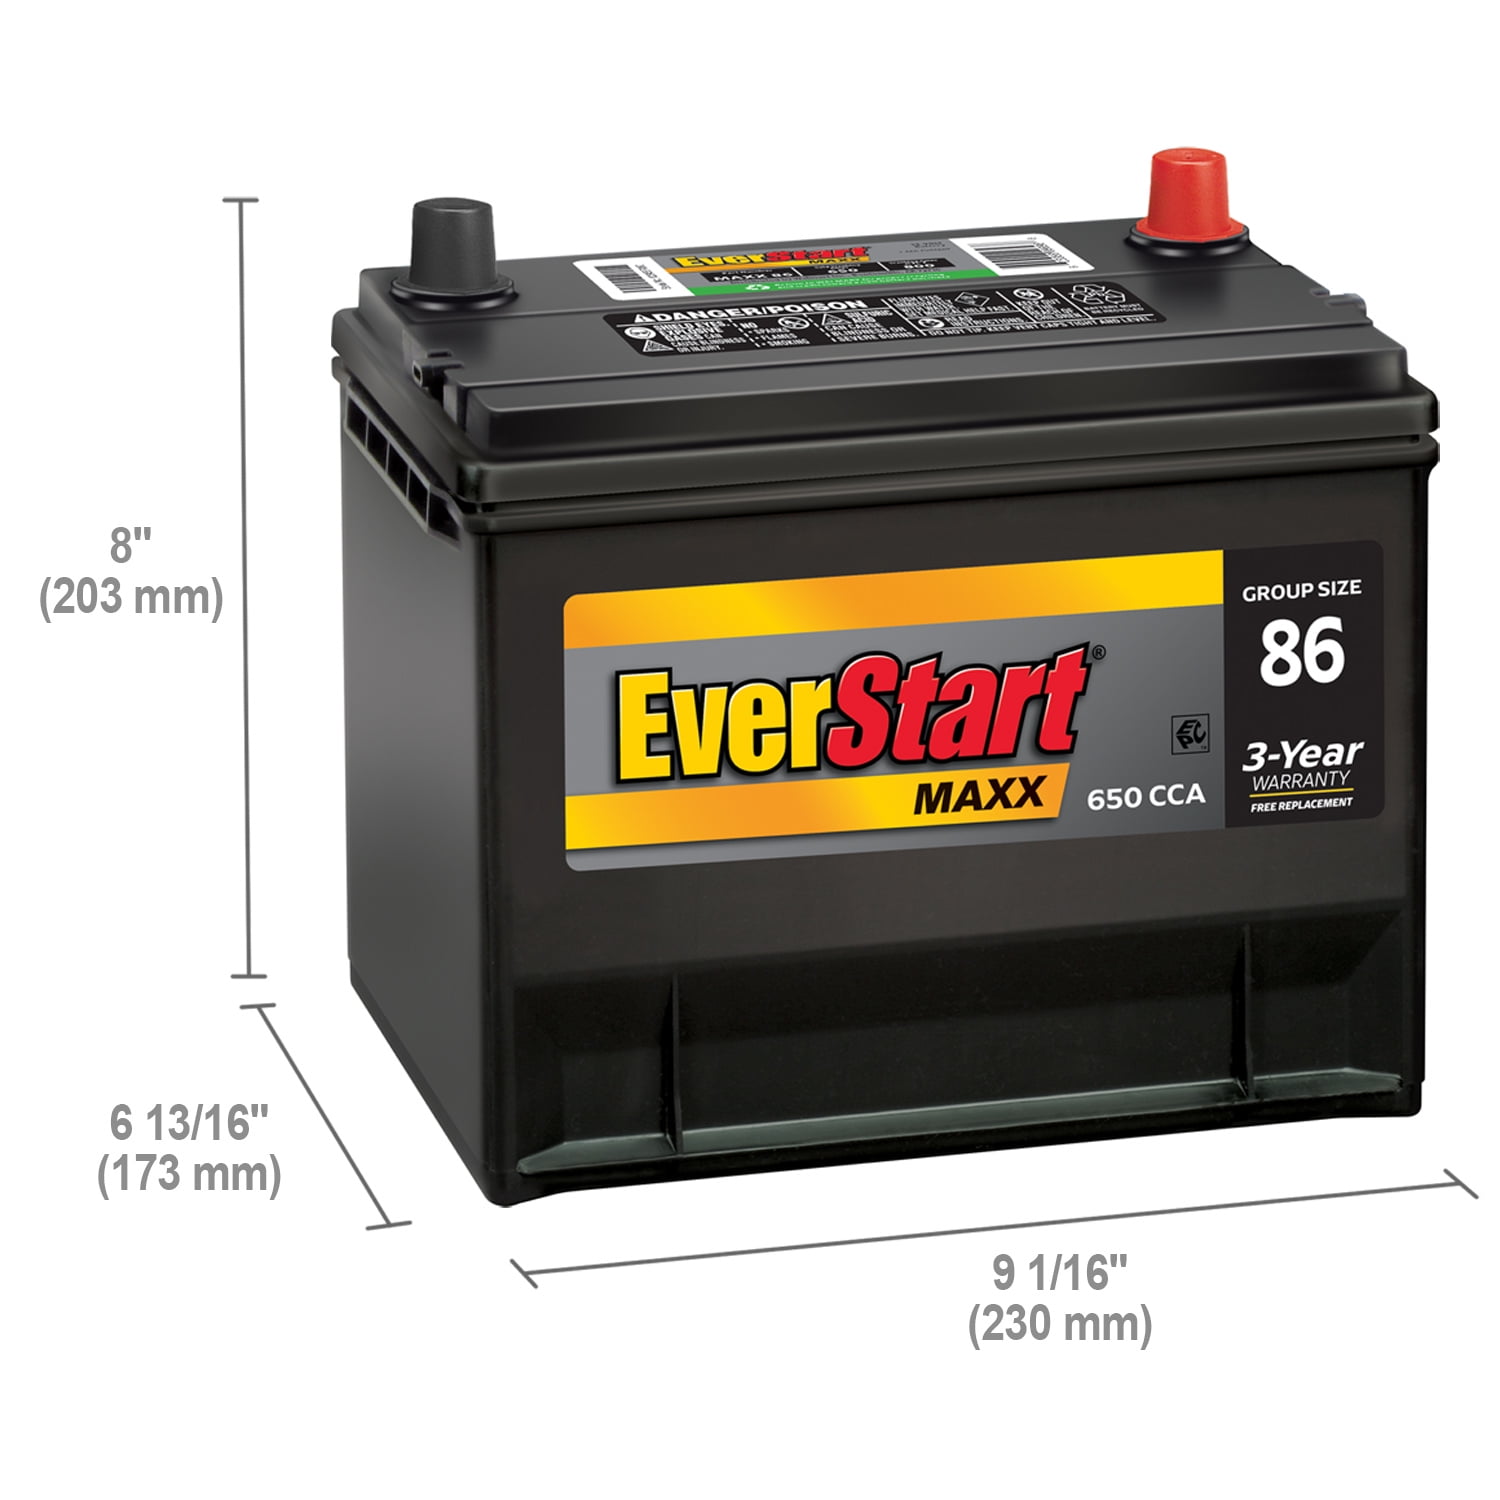 EverStart Maxx Lead Acid Automotive Battery, Group Size 86 (12 Volt/650  CCA) 